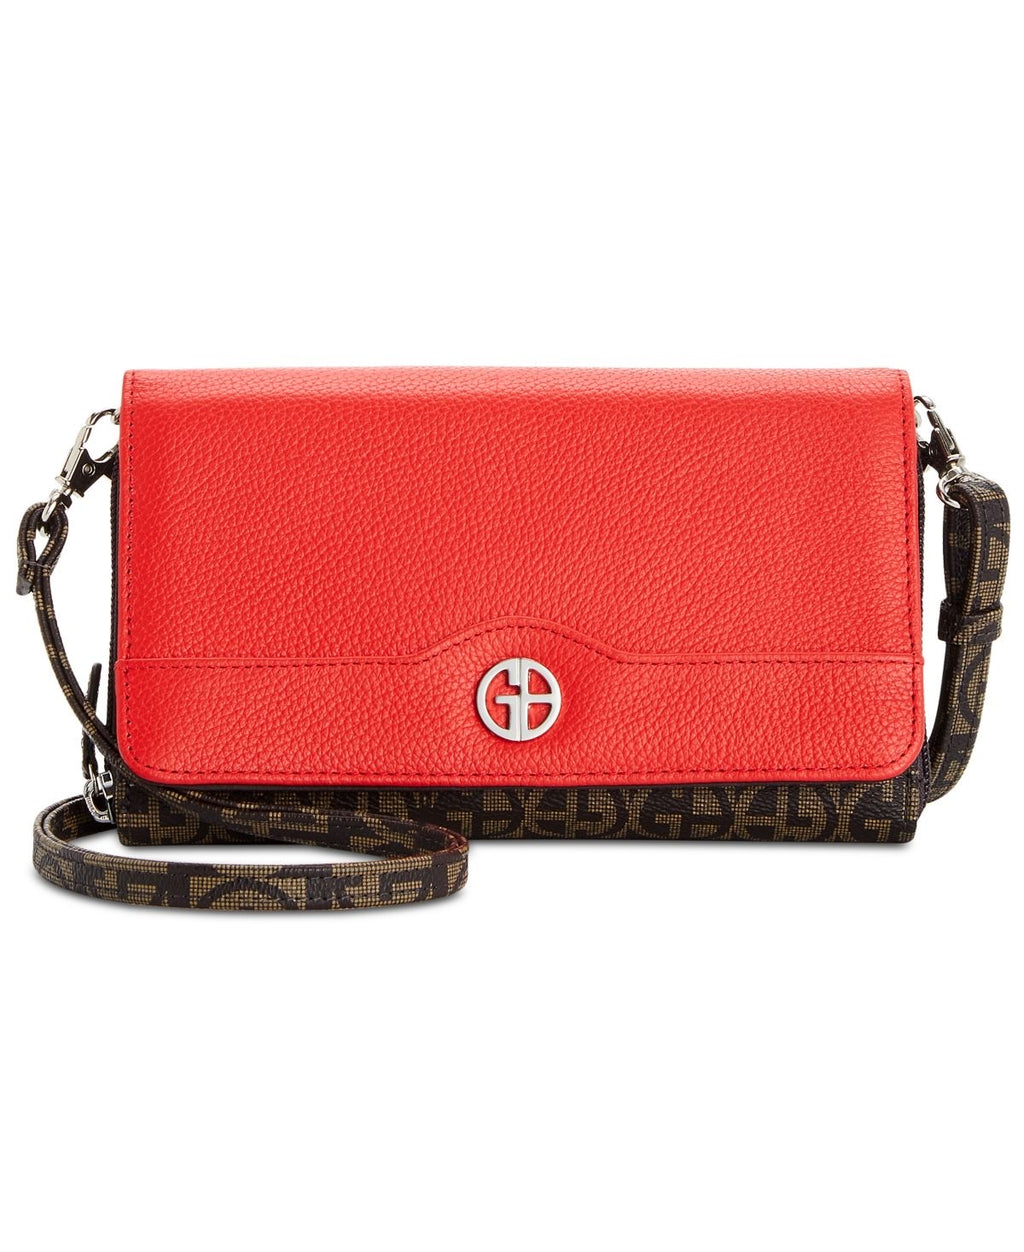 Giani Bernini Nappa Leather Venice Crossbody Bag: Handbags